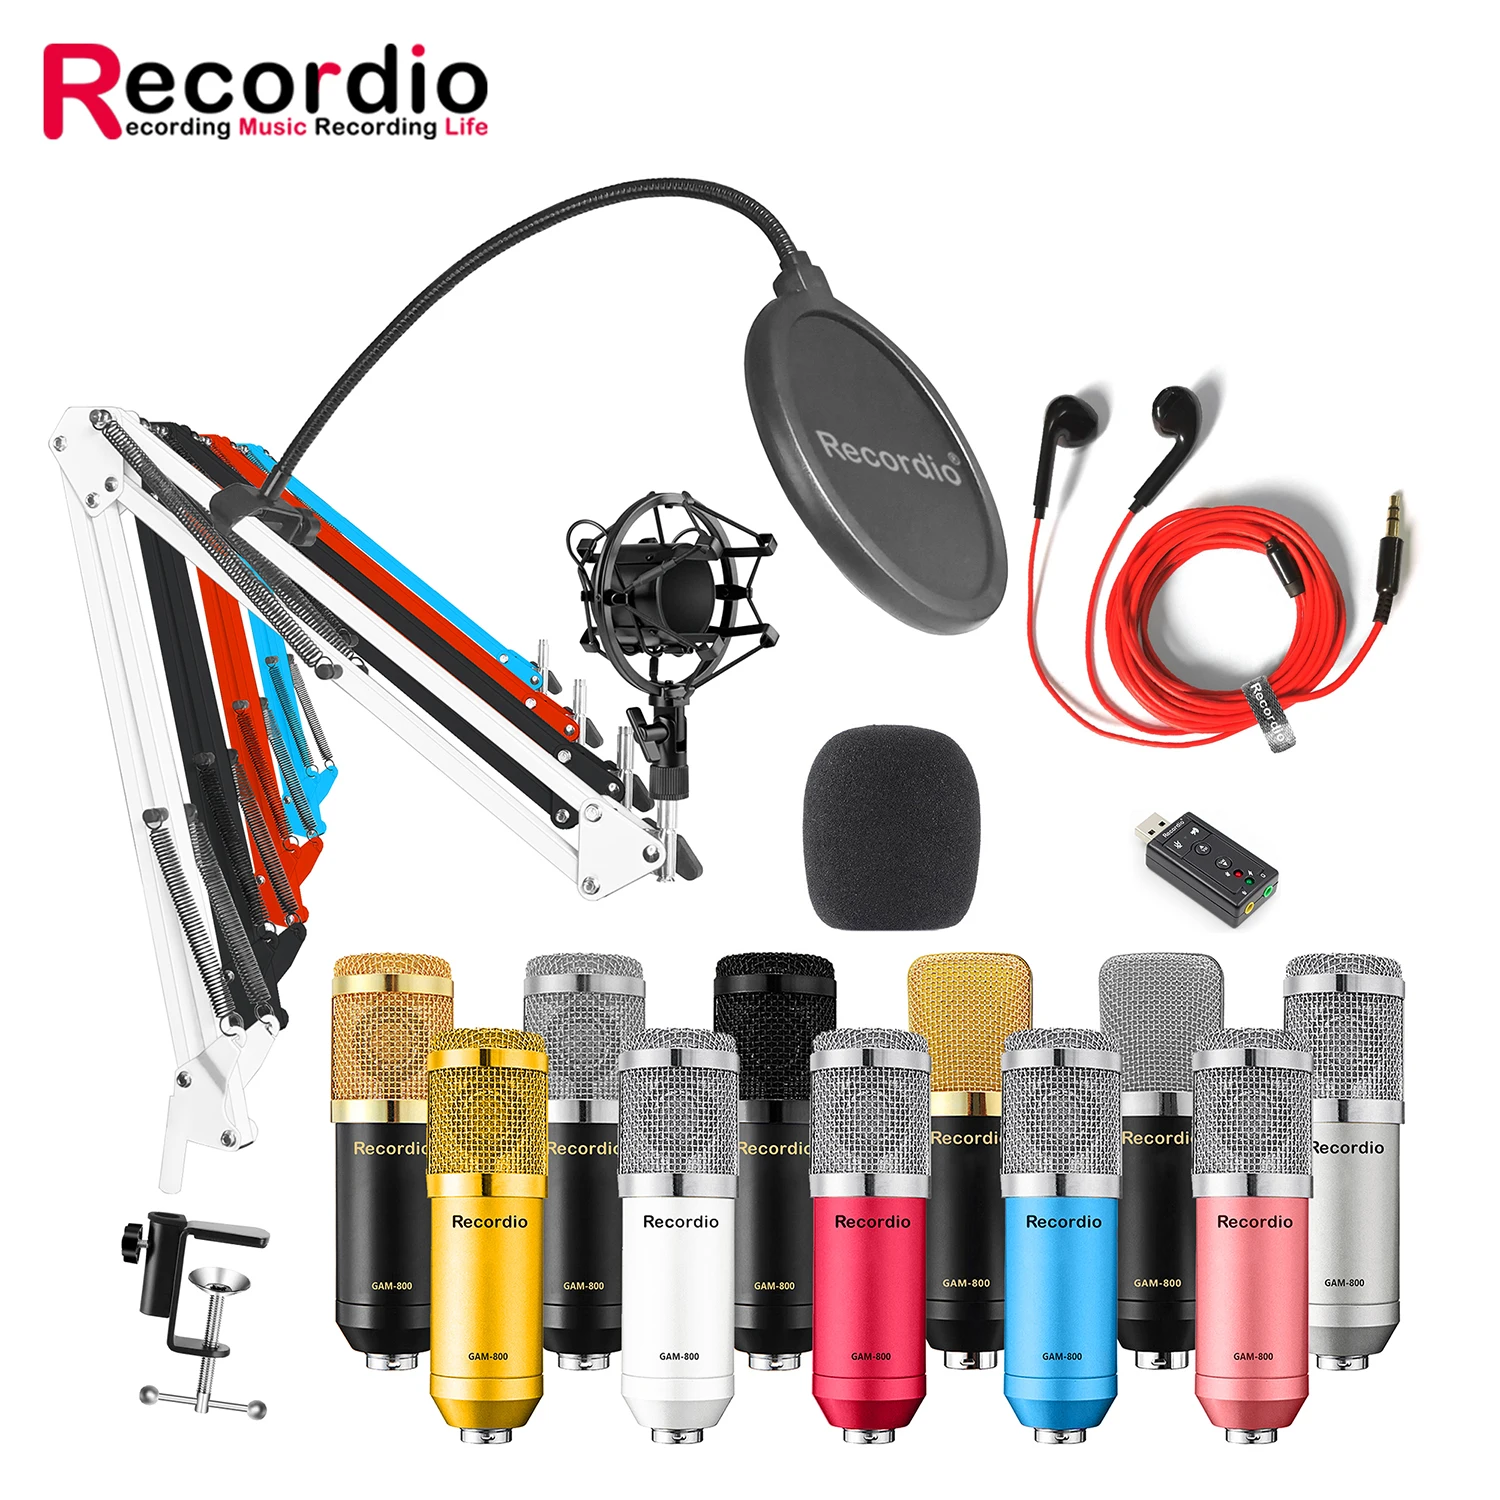 

GAM-800 Professional Condenser Microphone BM-800 Studio Sound Recording Microphone